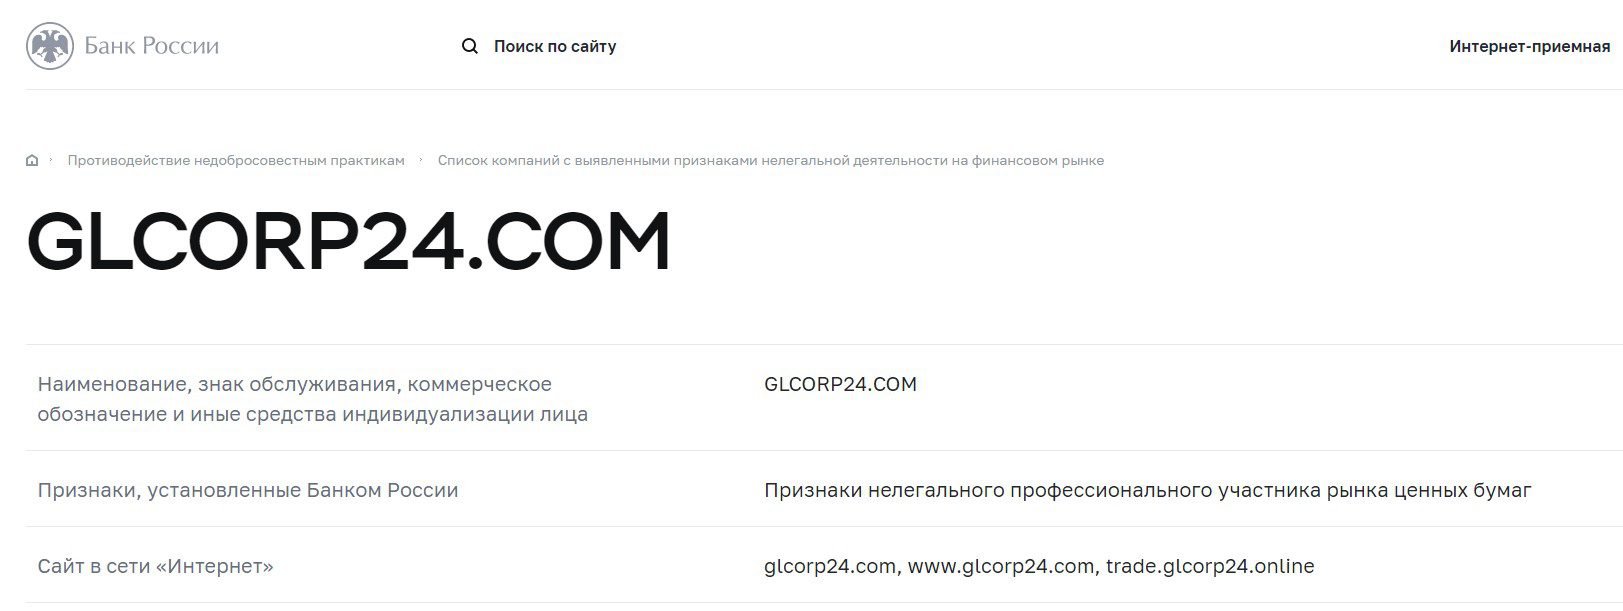 Glcorp24.com в реестре ЦБ